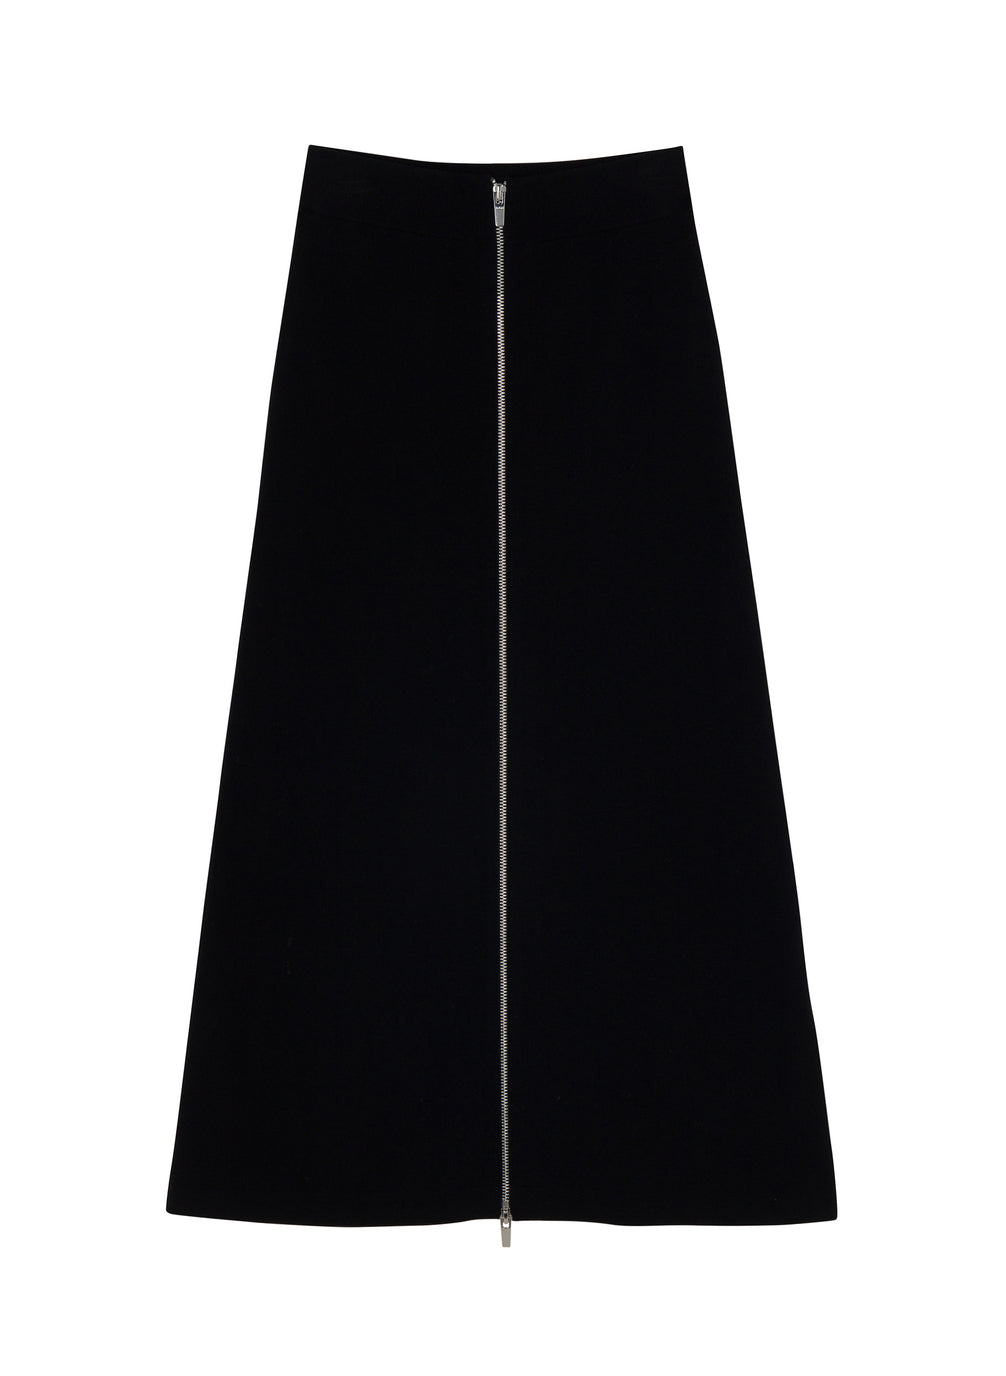 flatlay of black midi skirt with contrast zipper